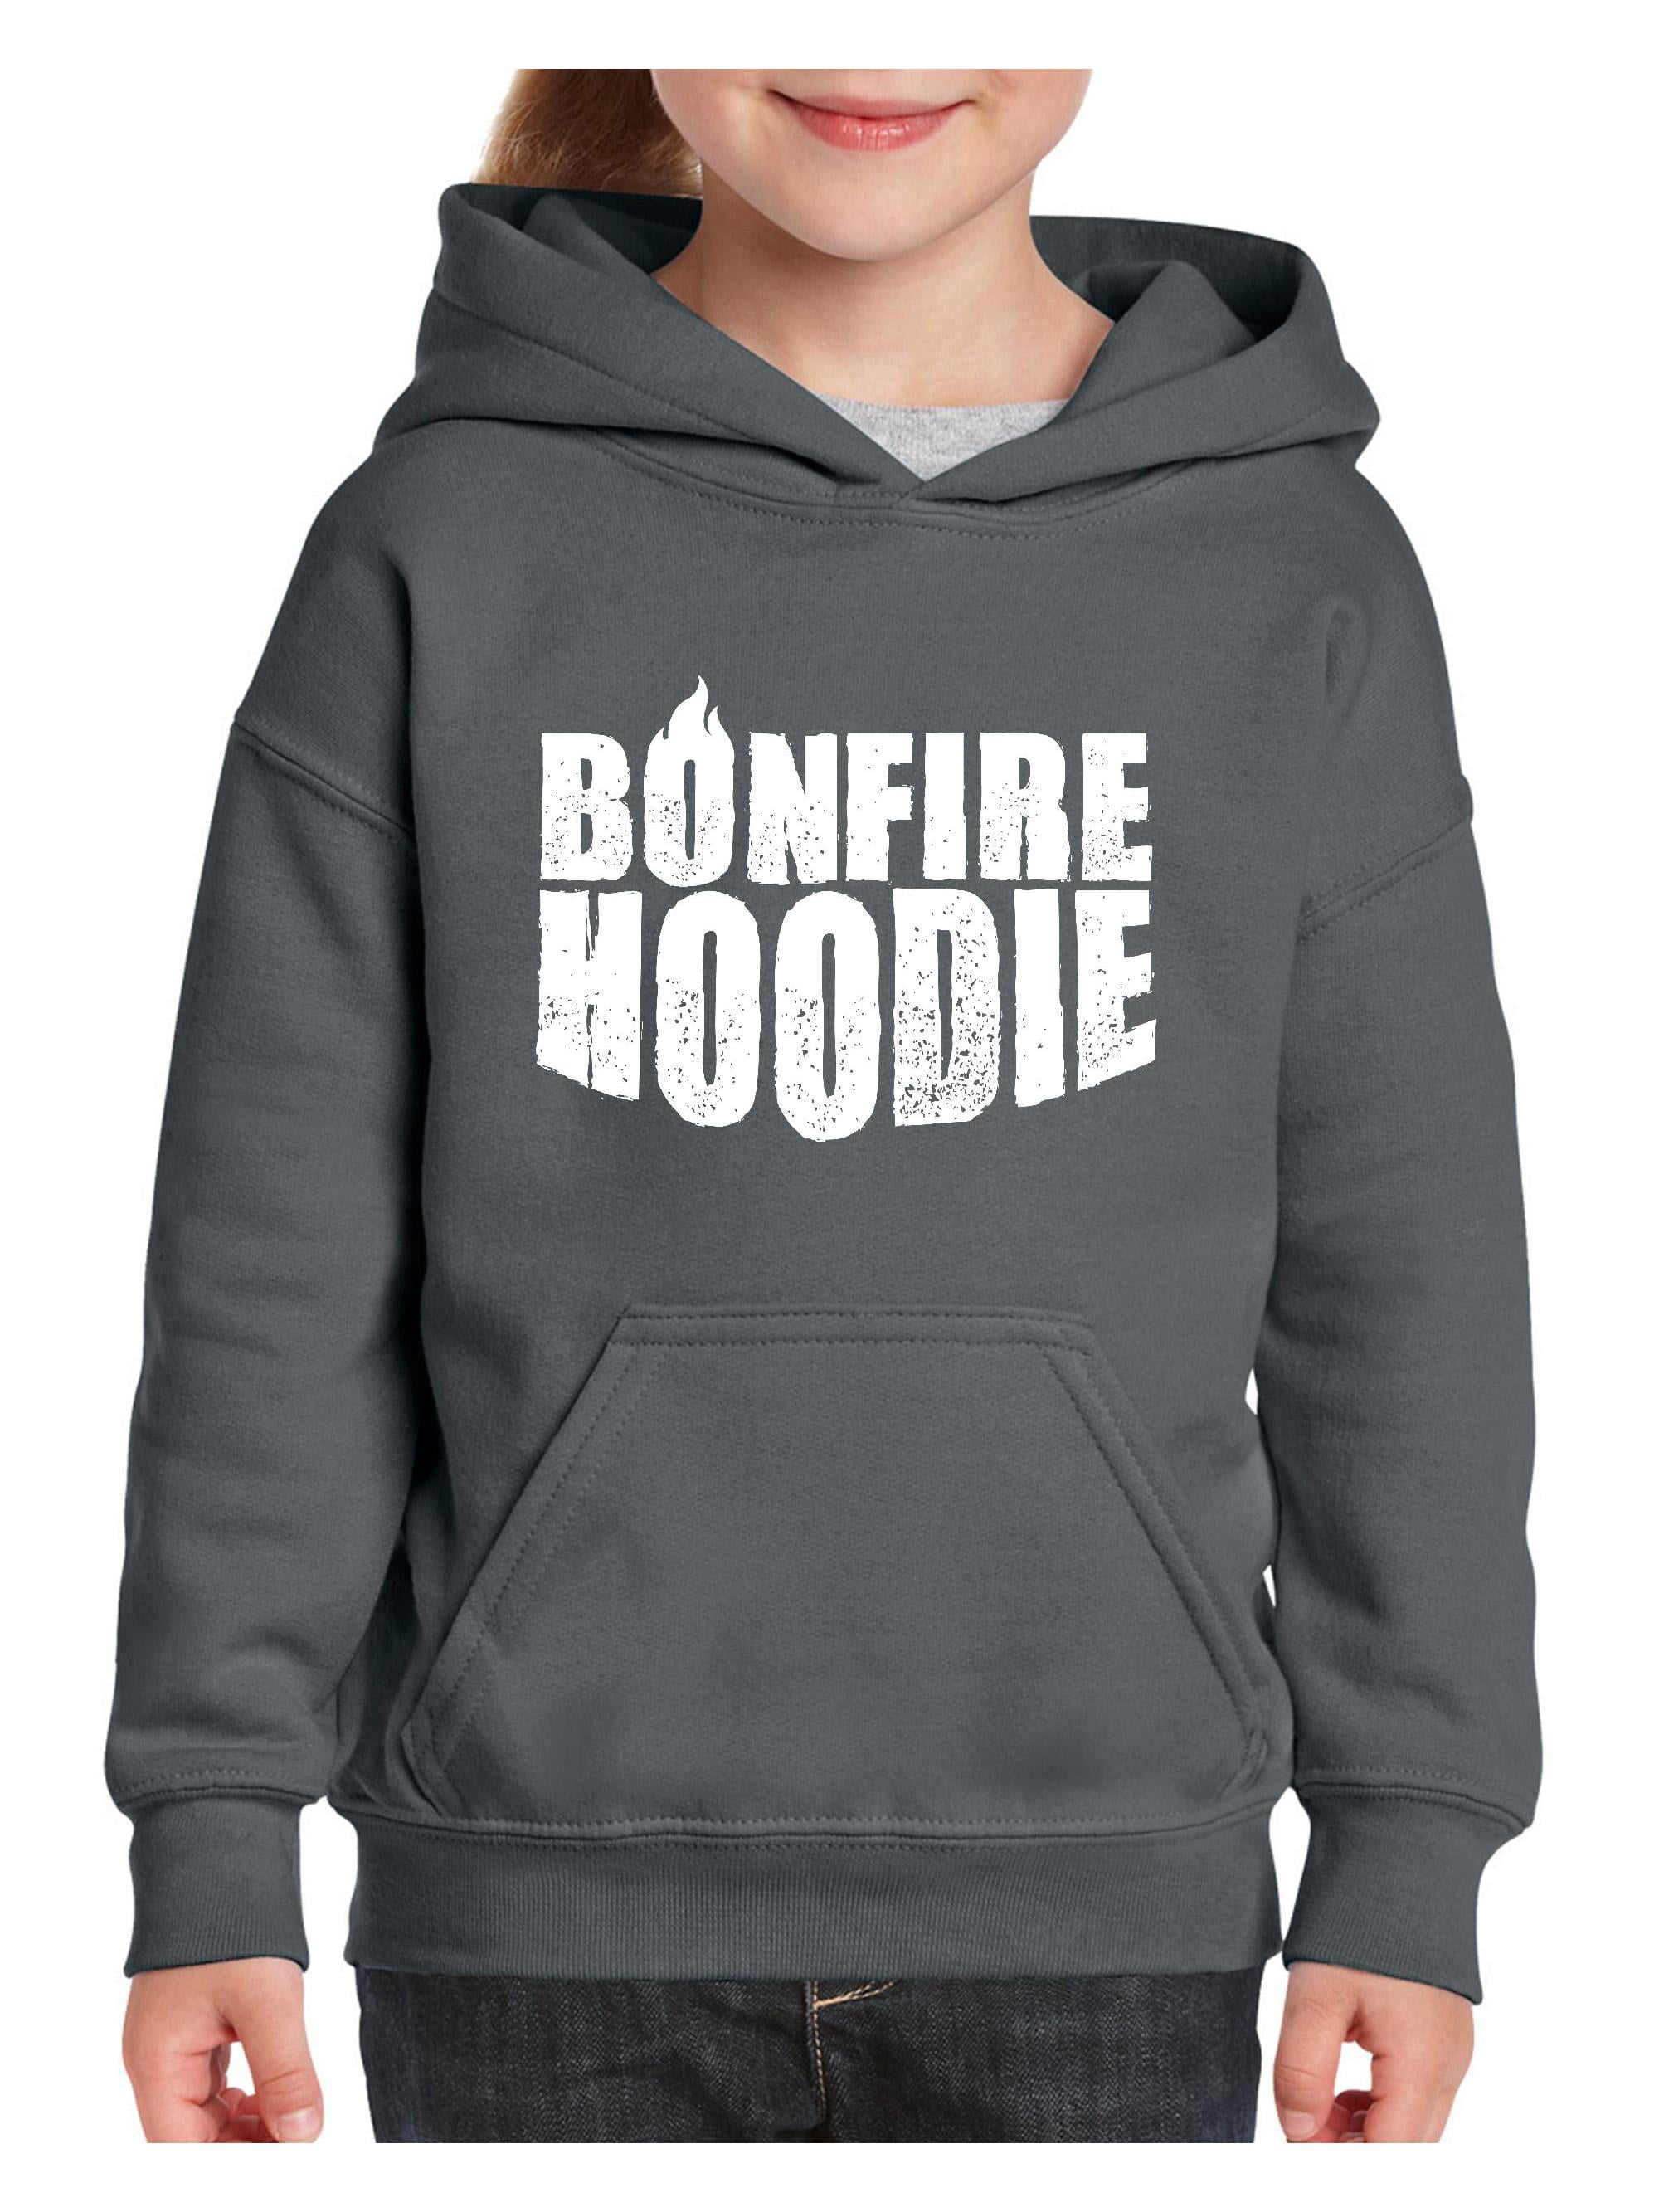 wellcoda Bonfire Fire Night Mens Sweatshirt Burning Casual Jumper